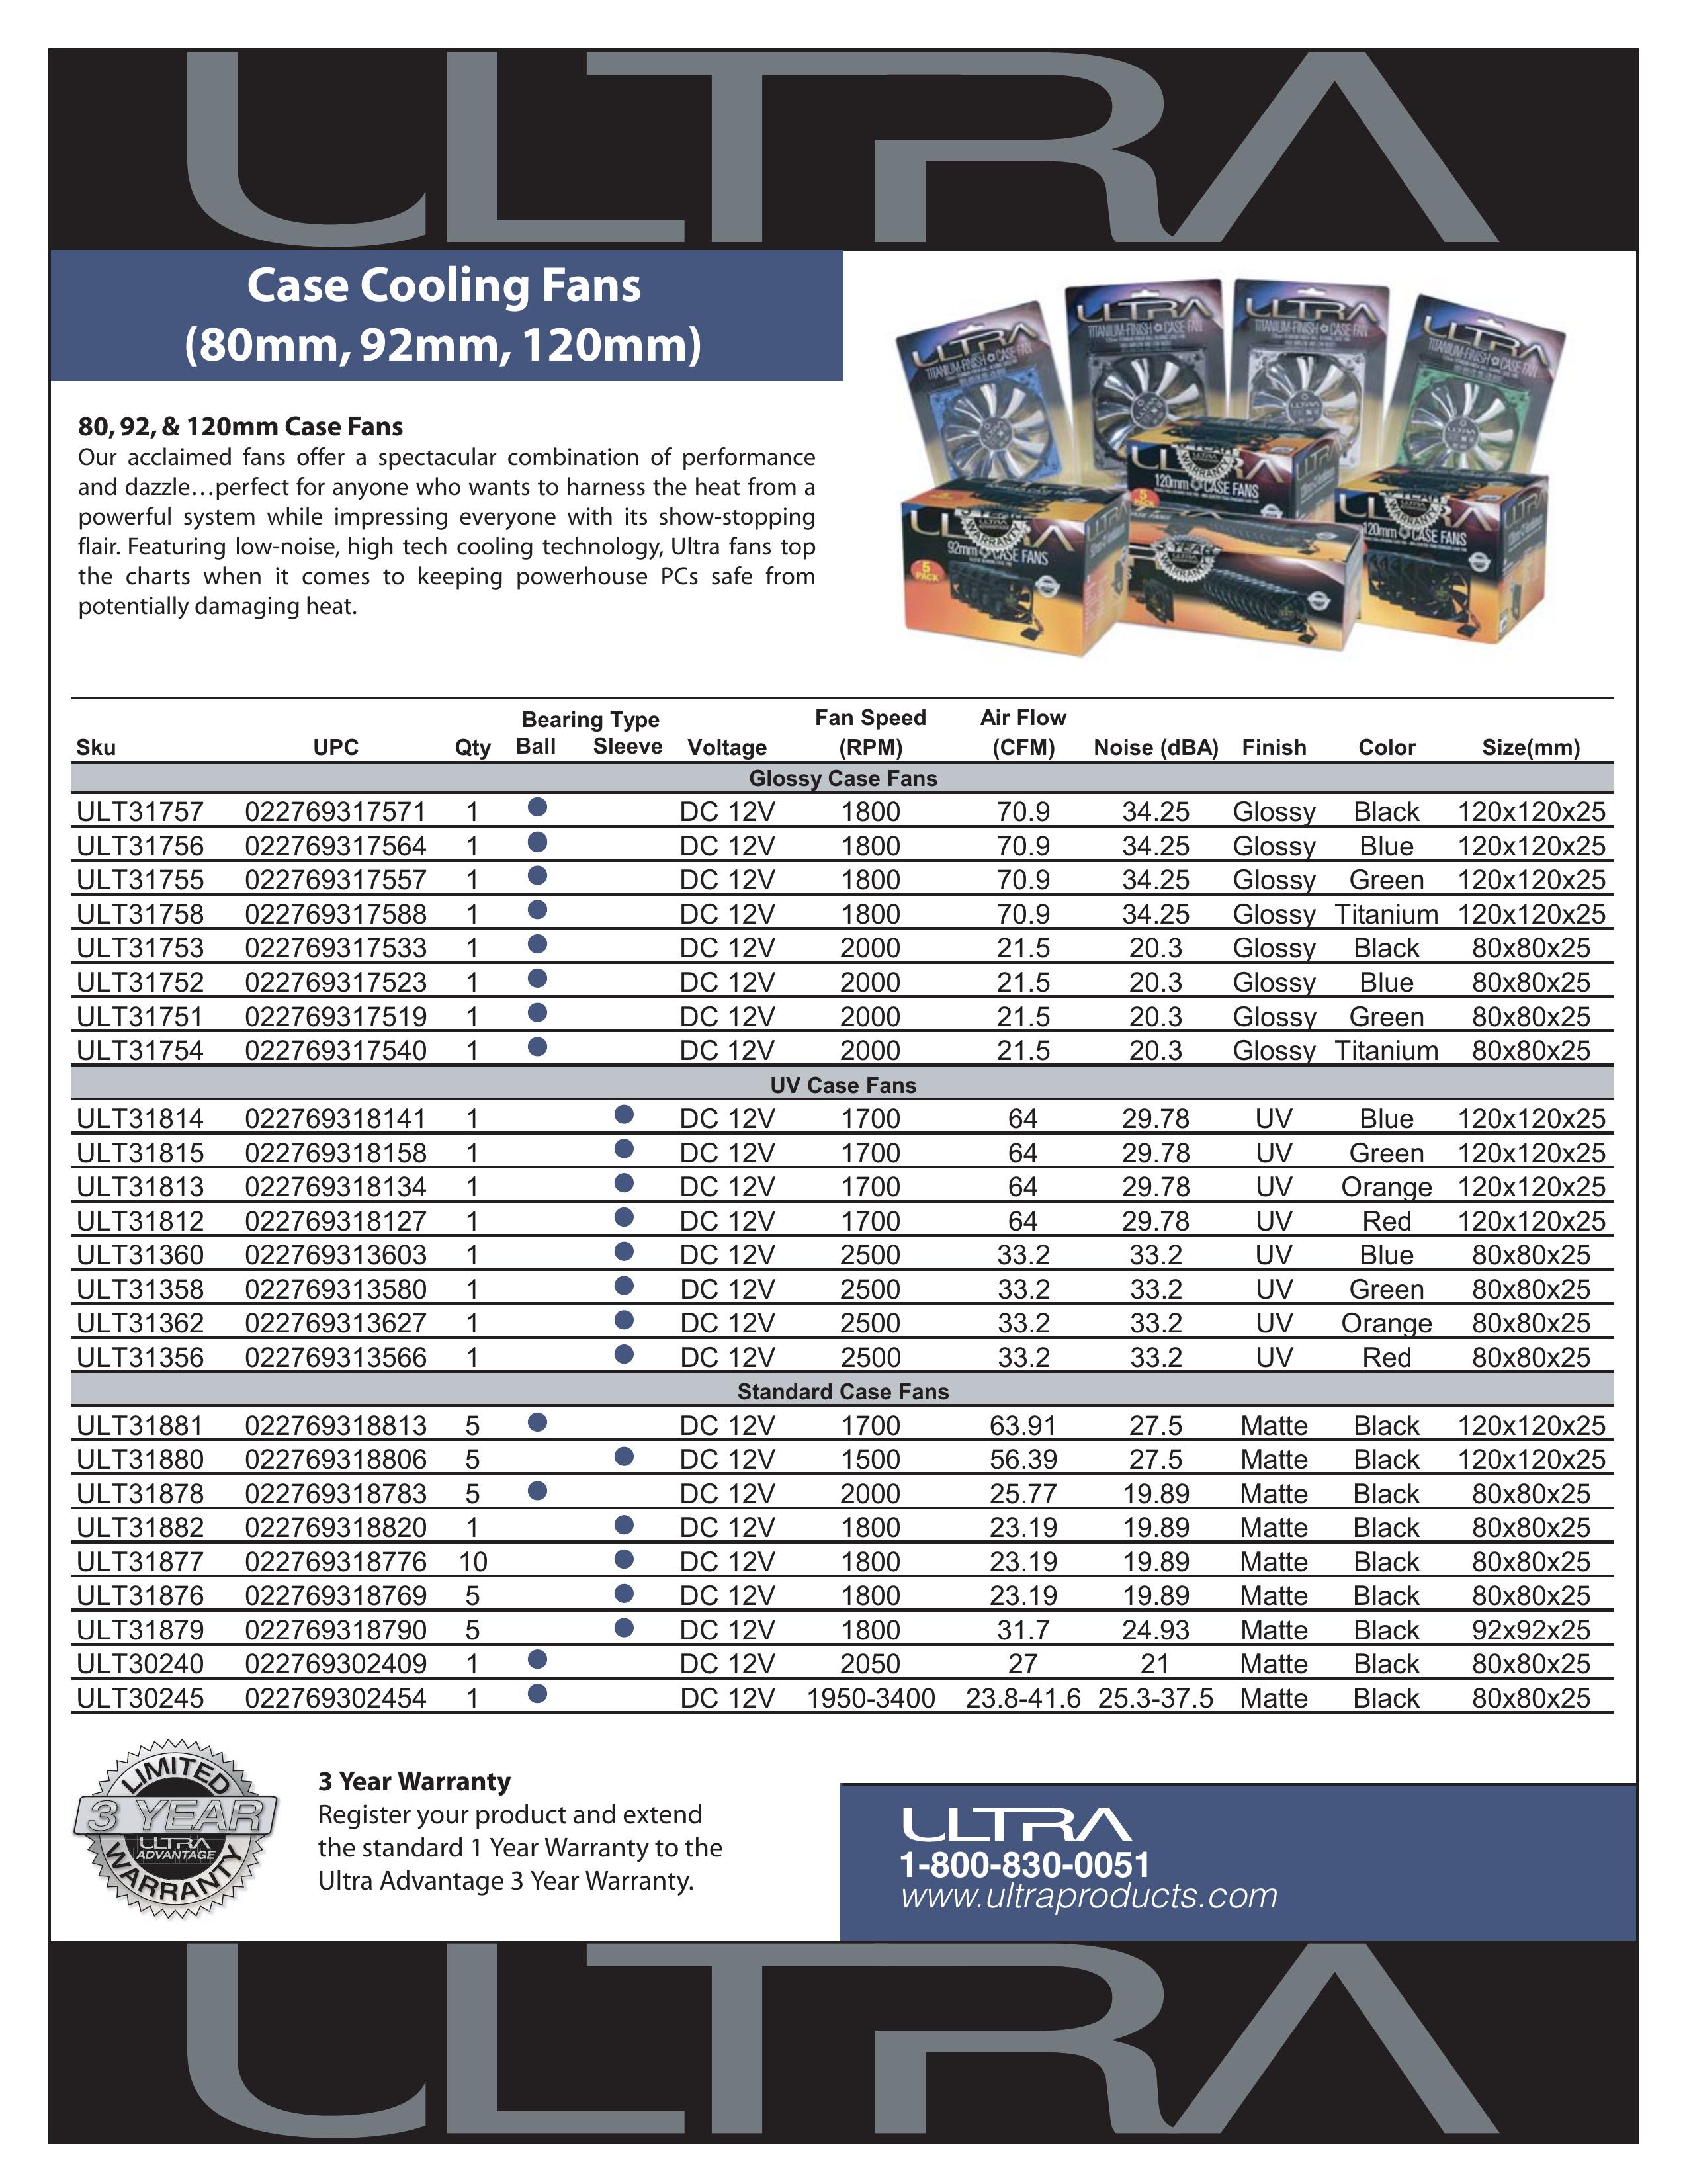 Ultra Products ULT31753 Ventilation Hood User Manual